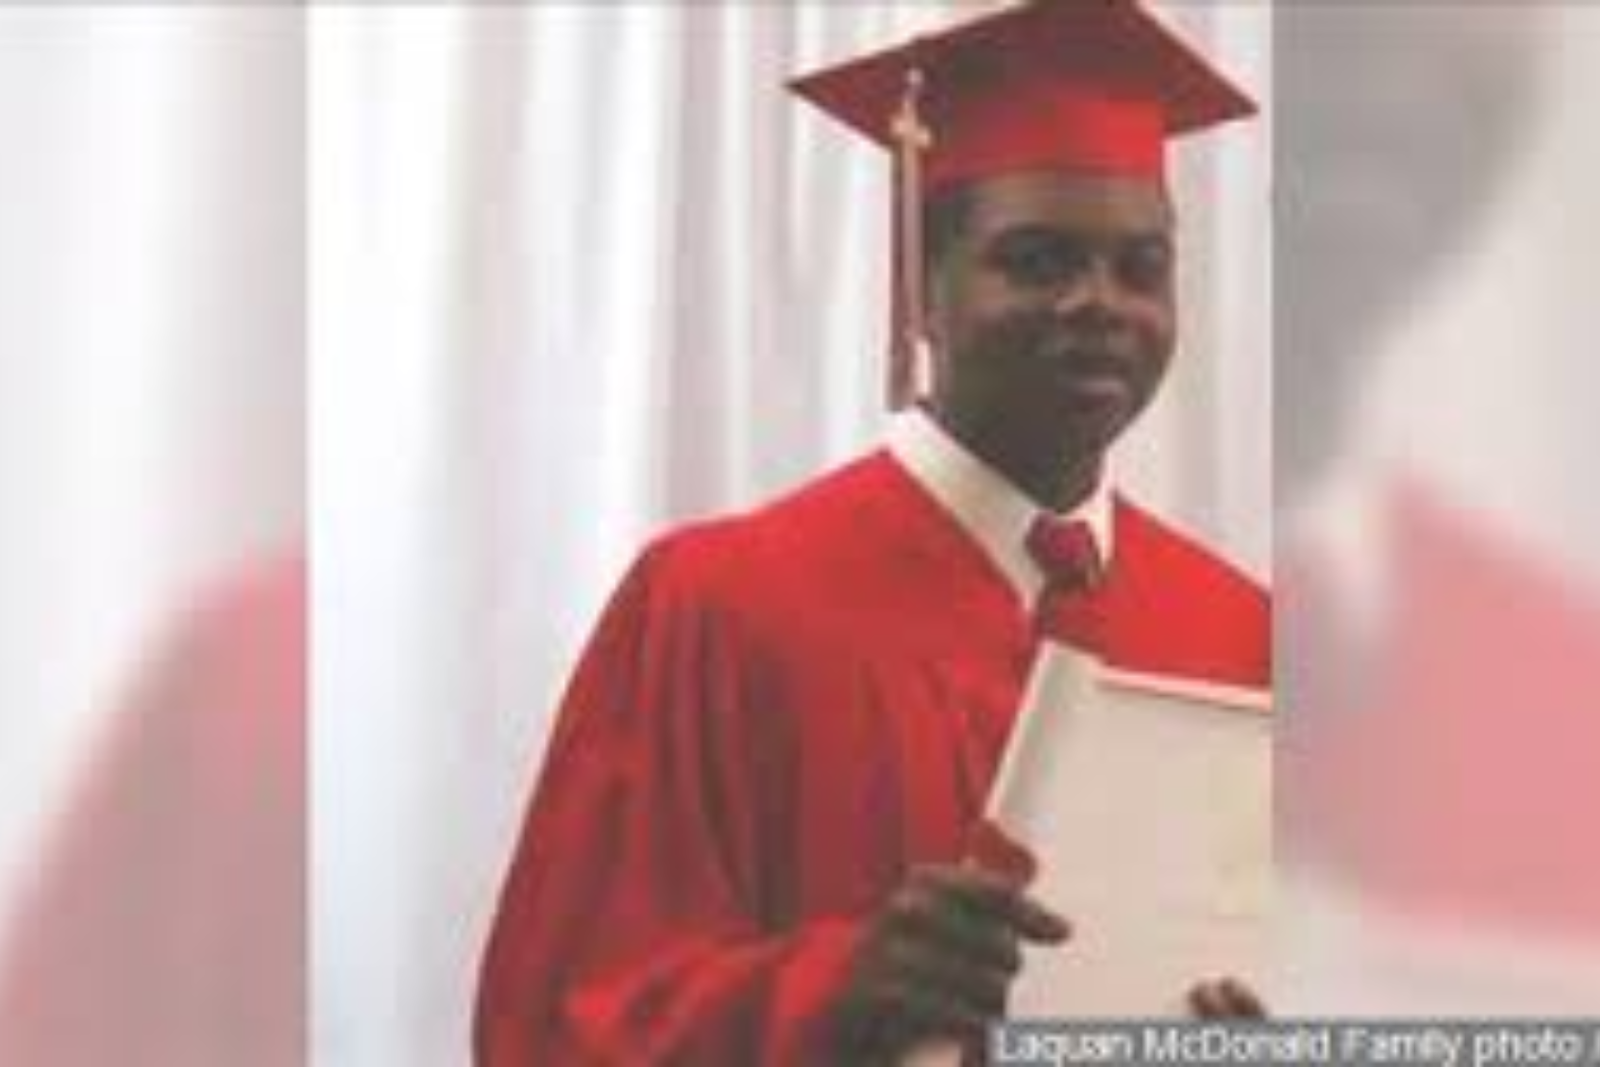  Laquan McDonald: Chicago, Illinois police brutality case